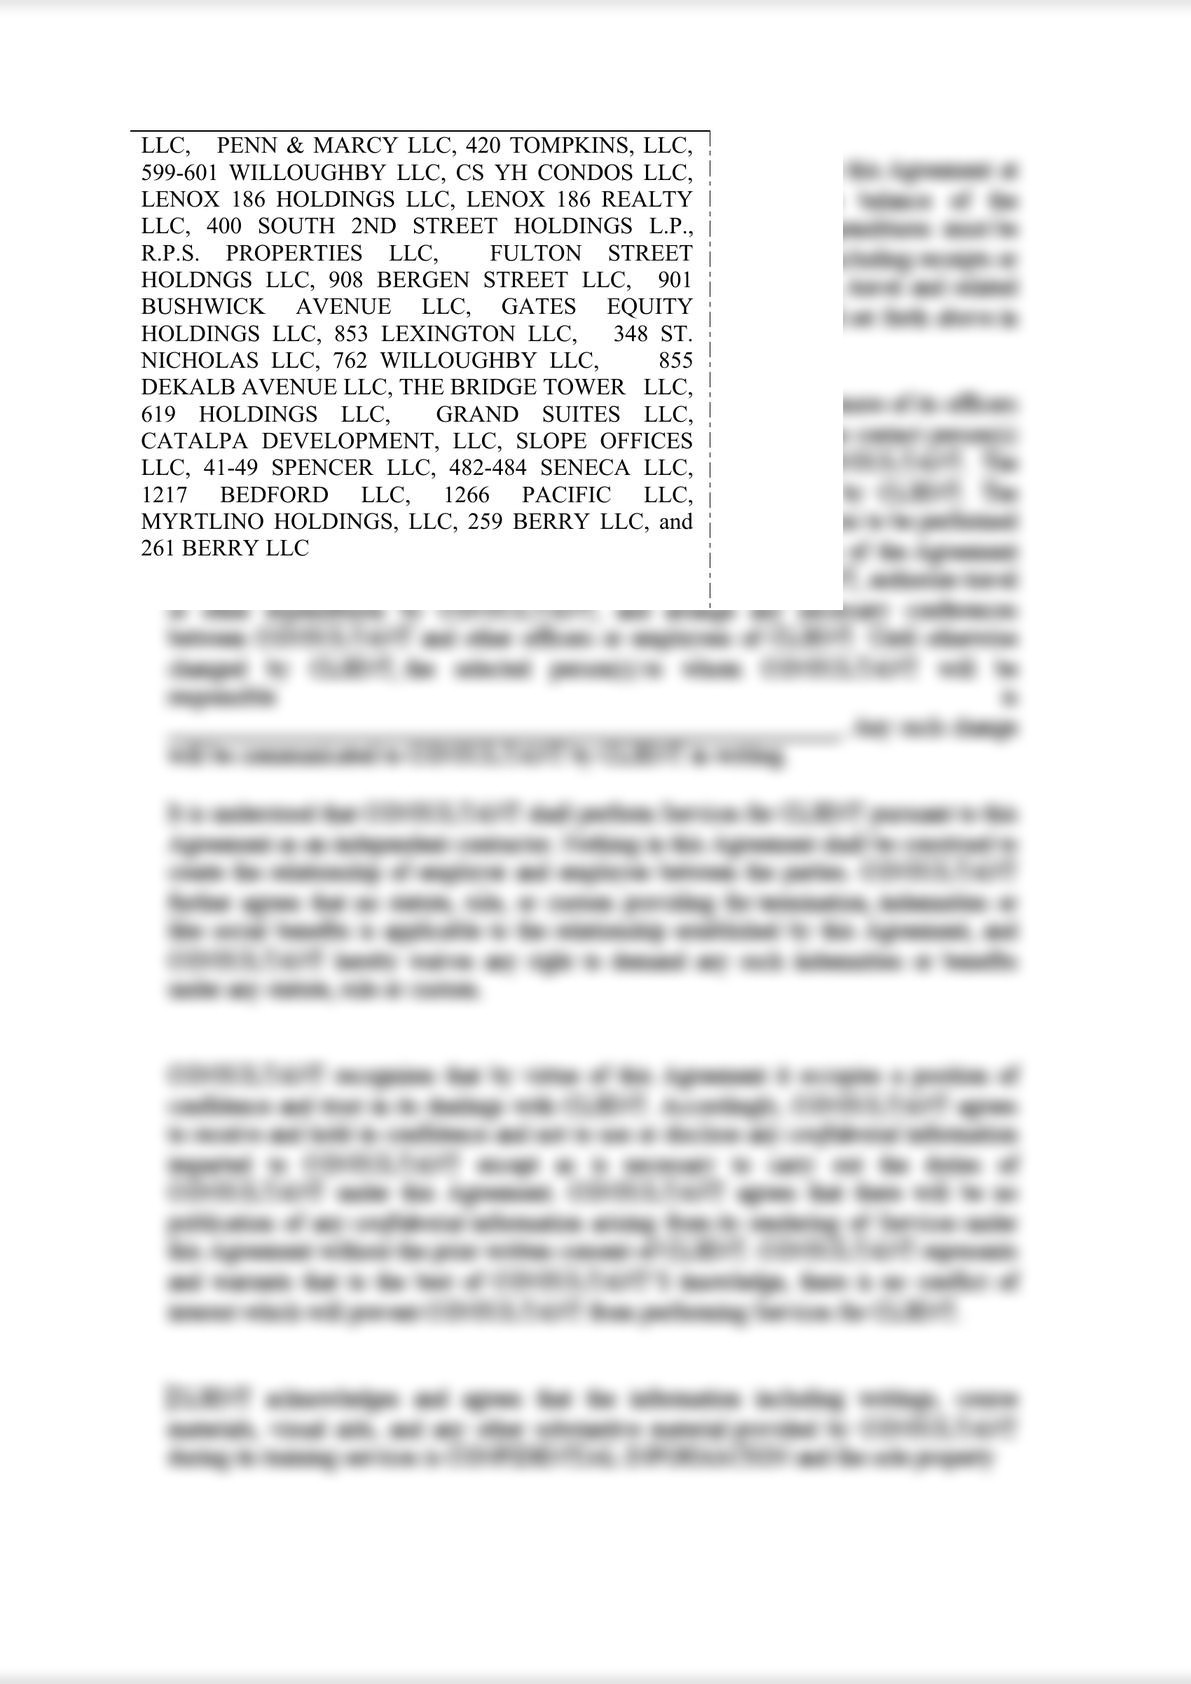 Sample of Notice of Subpoena-1